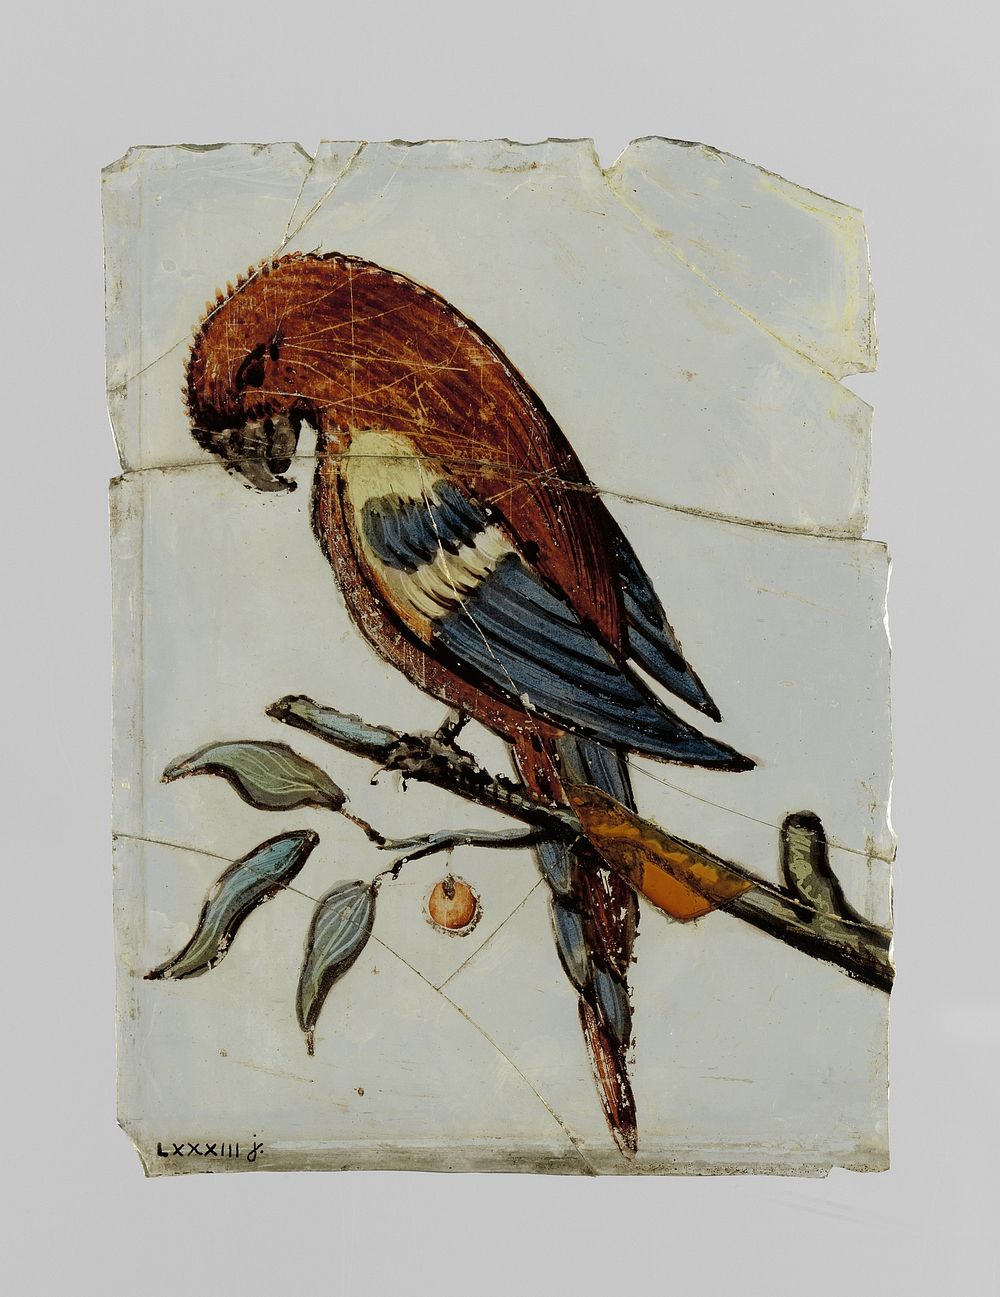 Ruit met een papegaai (c. 1650 - c. 1675) by anonymous